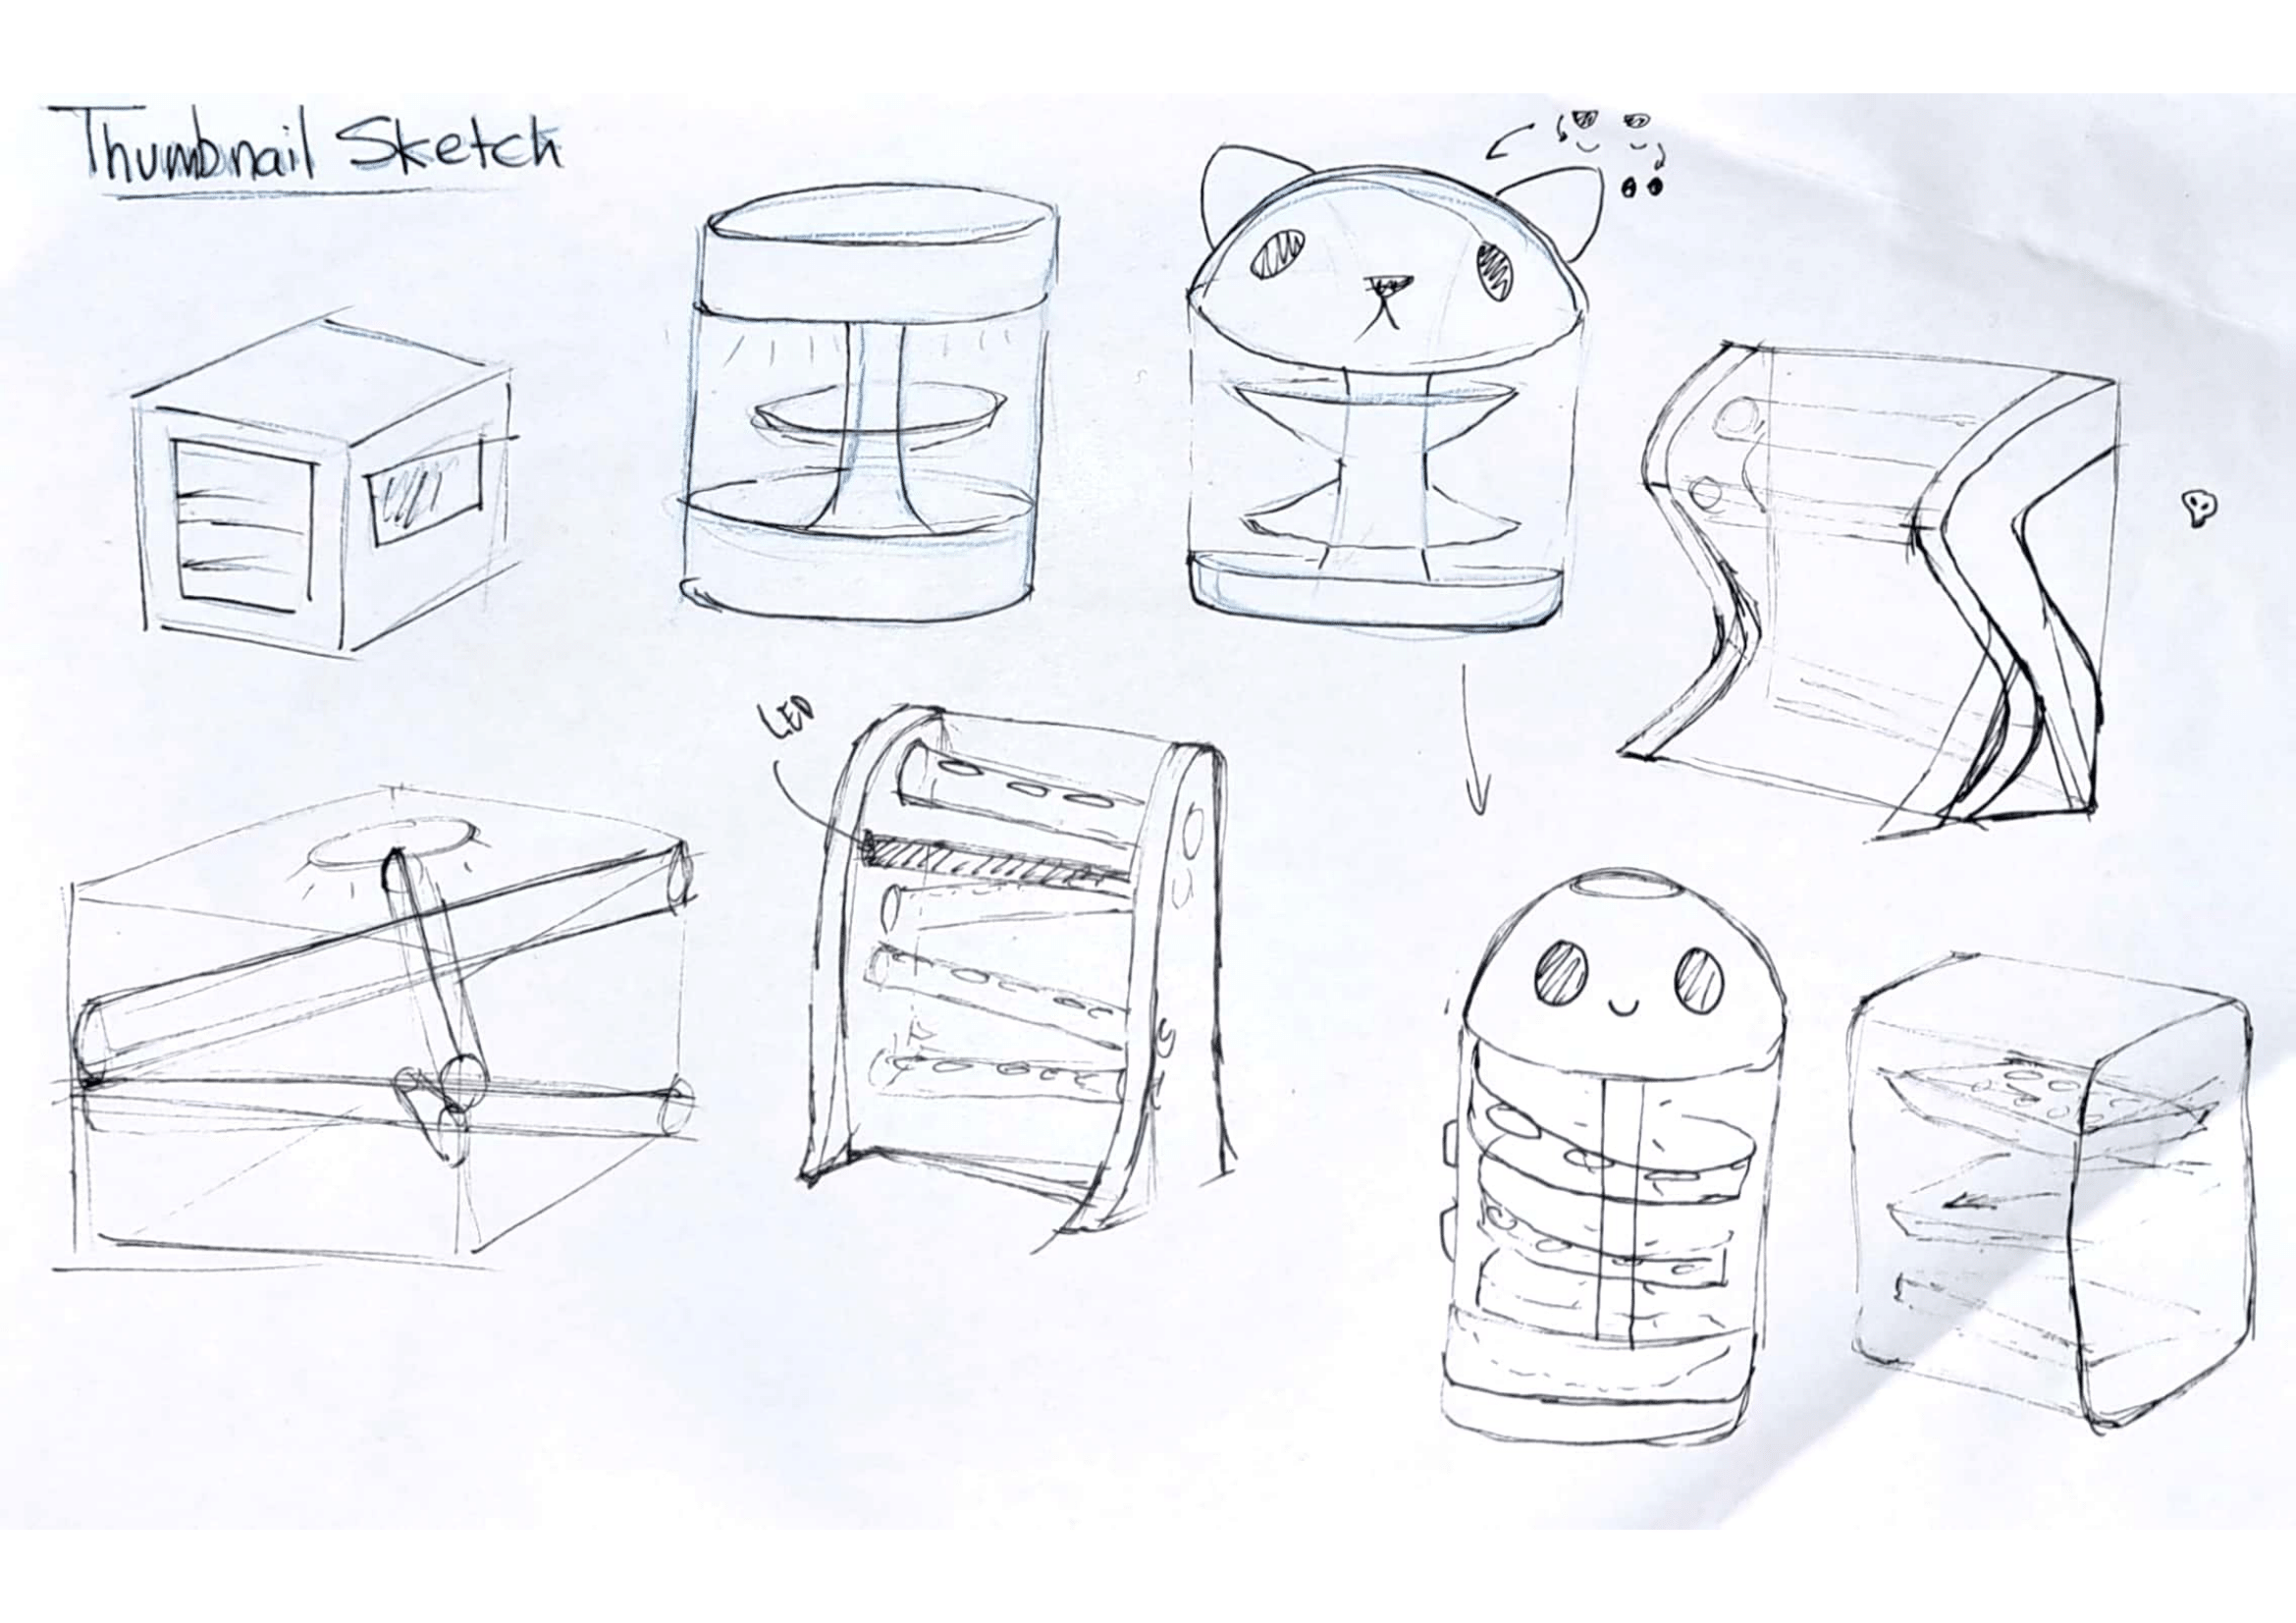 (figure L - Thumbnail sketches)